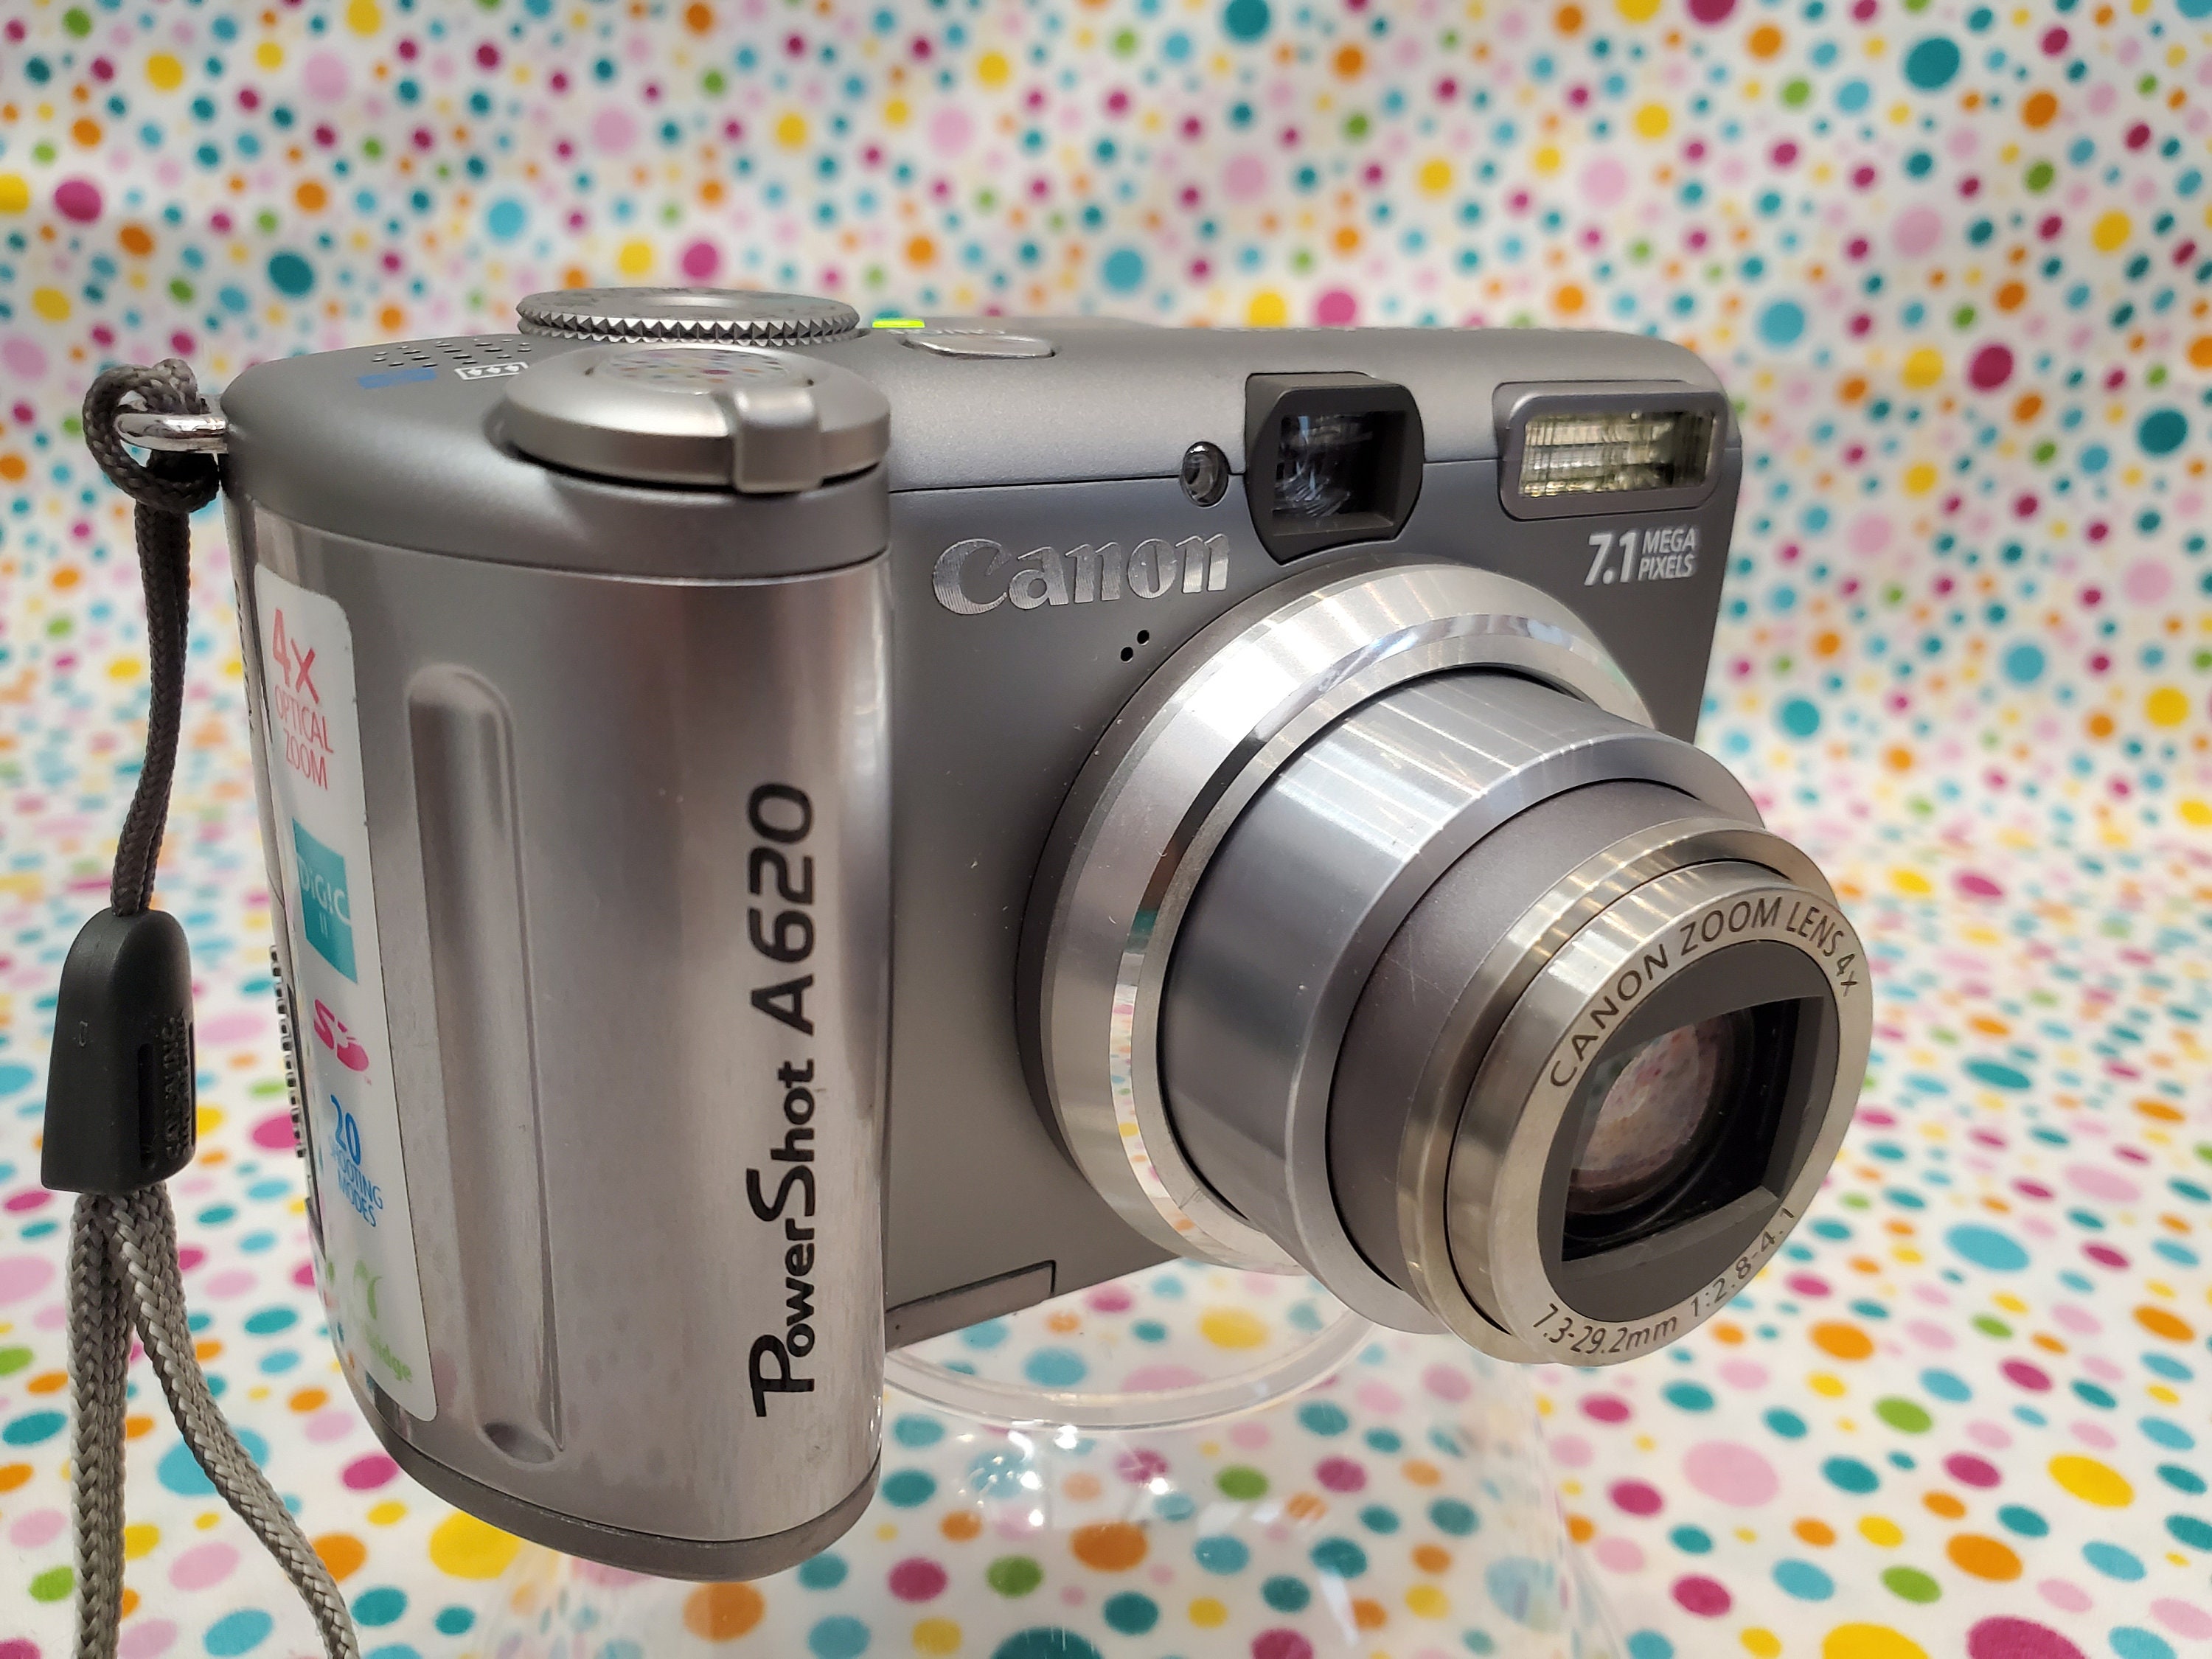 Canon PowerShot A620 7.1MP Digital Camera with 1 GB SD card Vintage Pristine